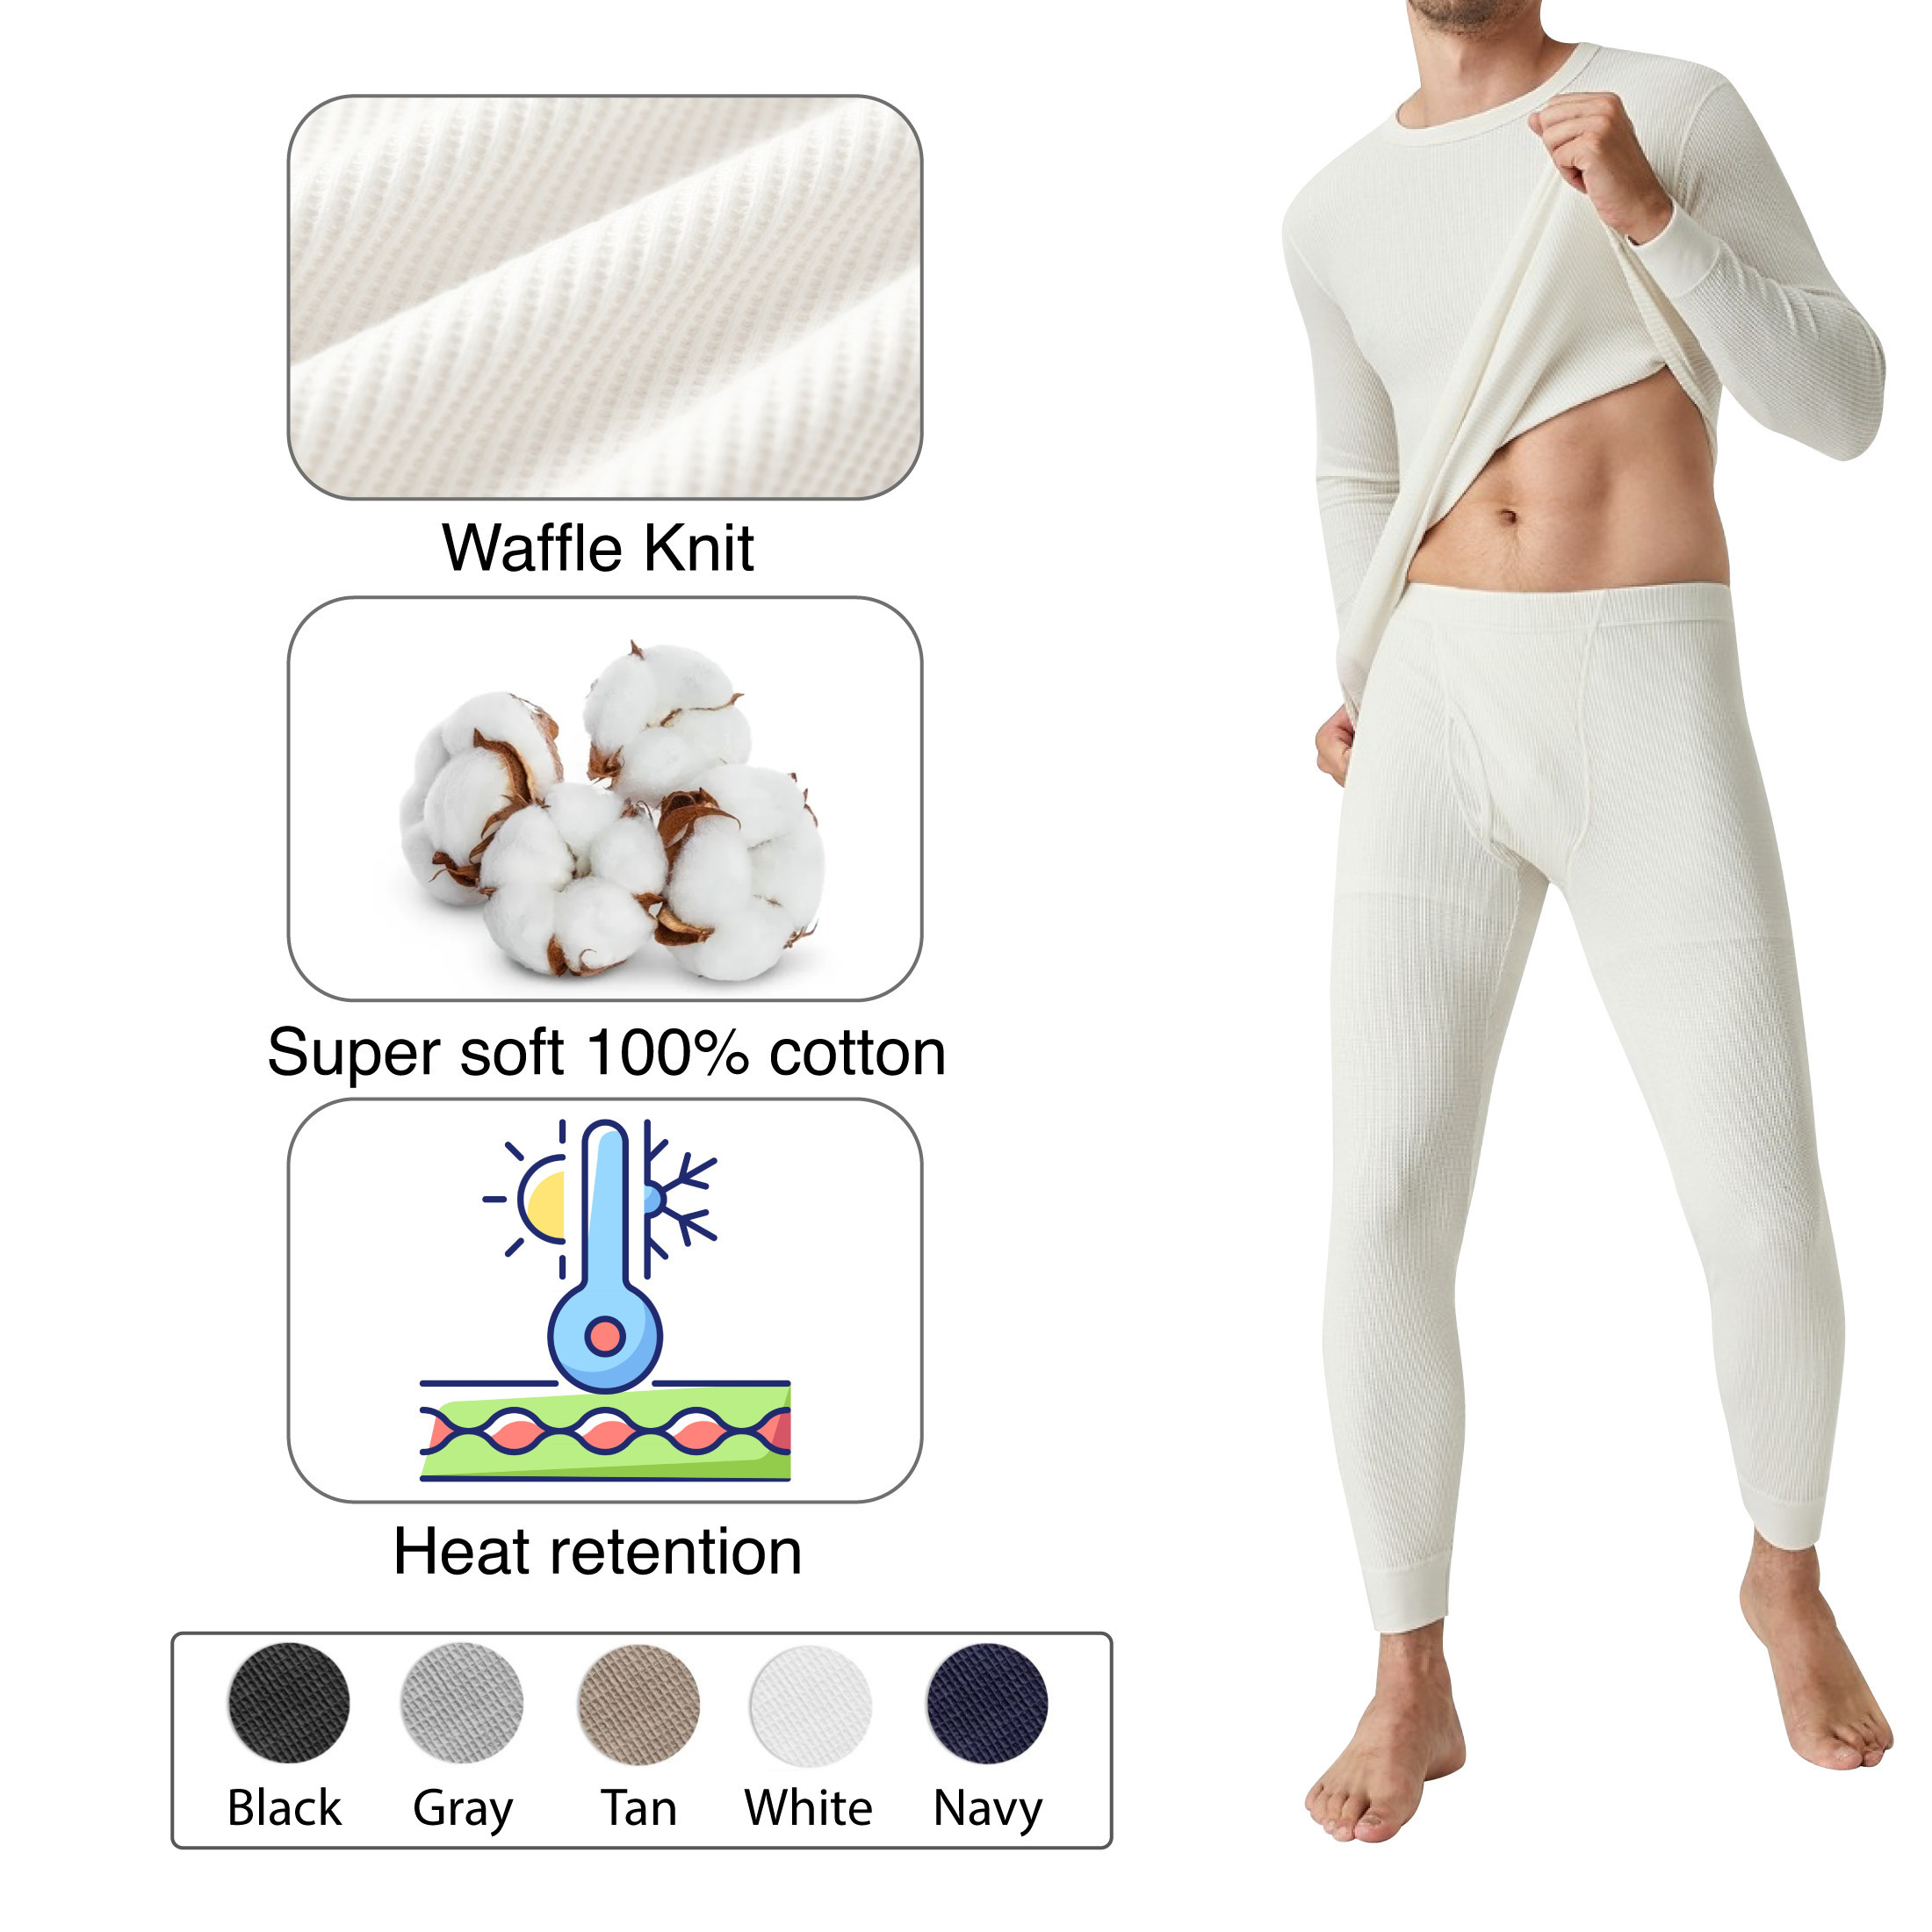 2-Piece: Men's Super Soft Cotton Waffle Knit Winter Thermal Underwear Set - Tan, Large